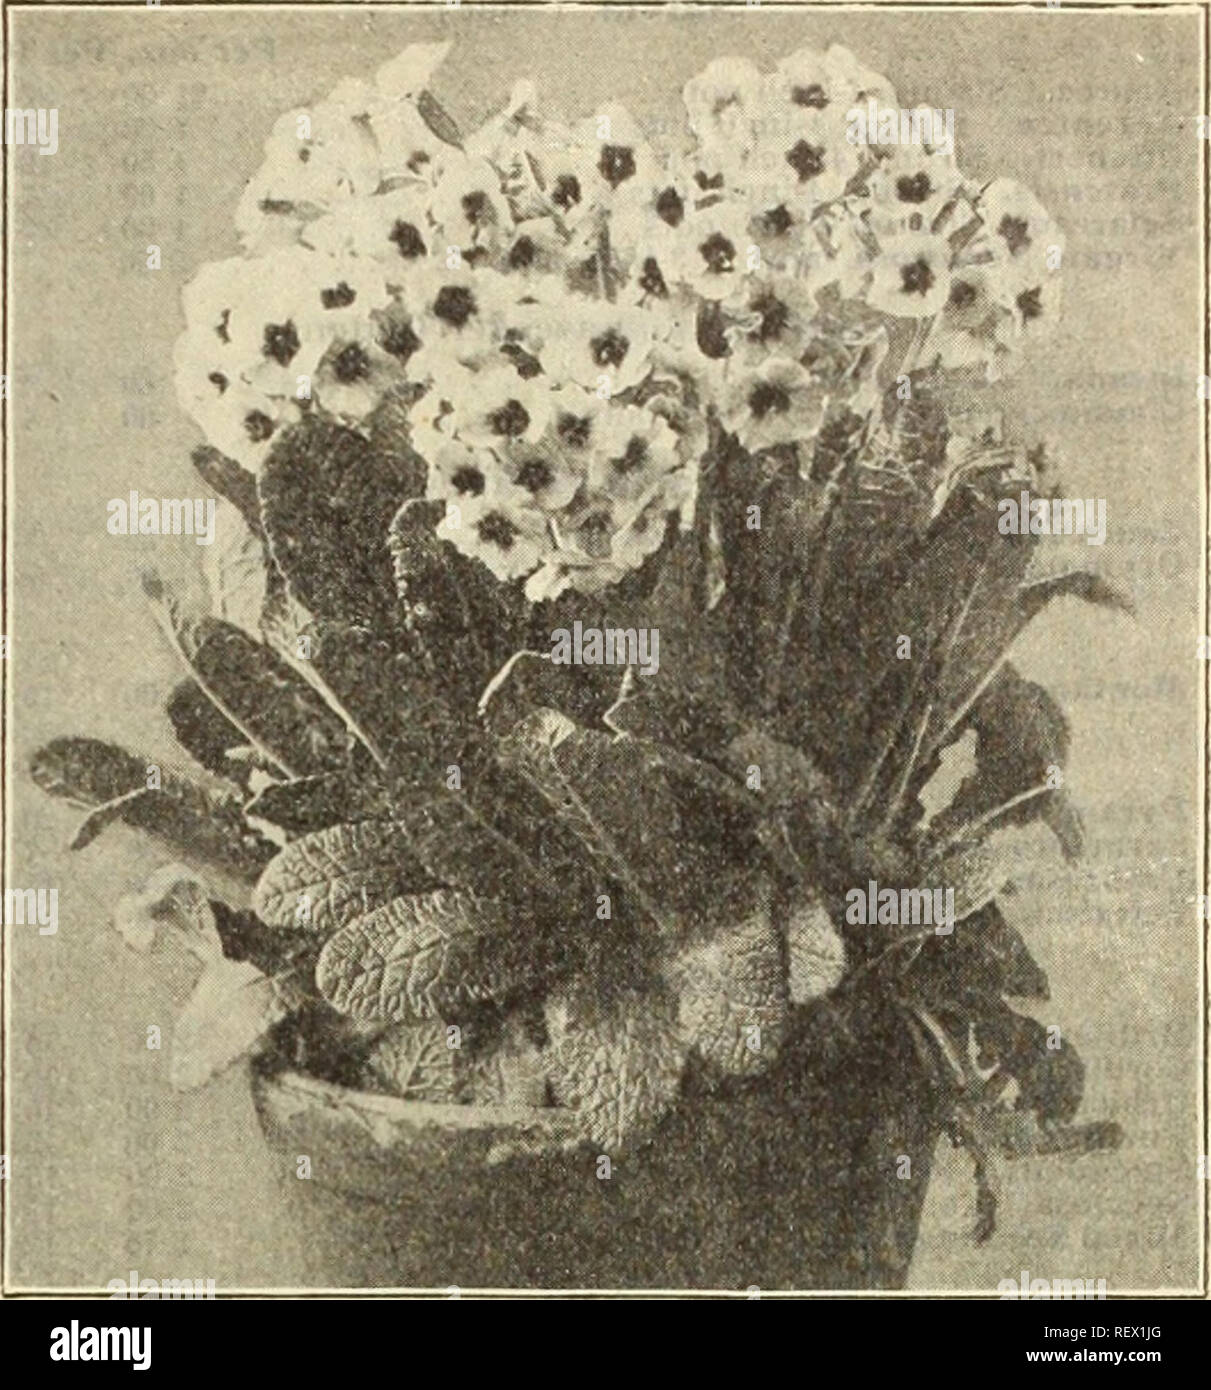 . Dreer's wholesale price list : seeds, plants, bulbs, etc. Bulbs (Plants) Catalogs; Flowers Seeds Catalogs; Vegetables Seeds Catalogs; Nurseries (Horticulture) Catalogs. HENRY A. DREER, PHILADELPHIA. PA., WHOLESALE PRICE LIST 51 Phlox Subulata. (Moss Pinks or Mountain Pinks.) Alba. White. .Atropurpurea. Purplish-rose. Bridesmaid. Purplish tinted white, with deeper eye. Lllacina. Ligrht lilac. Nelsonl. Pure white. Rosea. Bright rose. 75 cts. per doz.; $5.00 per 100; $40.00 per 1000. PhloxâVarious Types. Per doz. Per 100 DIvarlcata Alba Qrandlflora. New large, white-flow- ered form $2 00 $15 00 Stock Photo